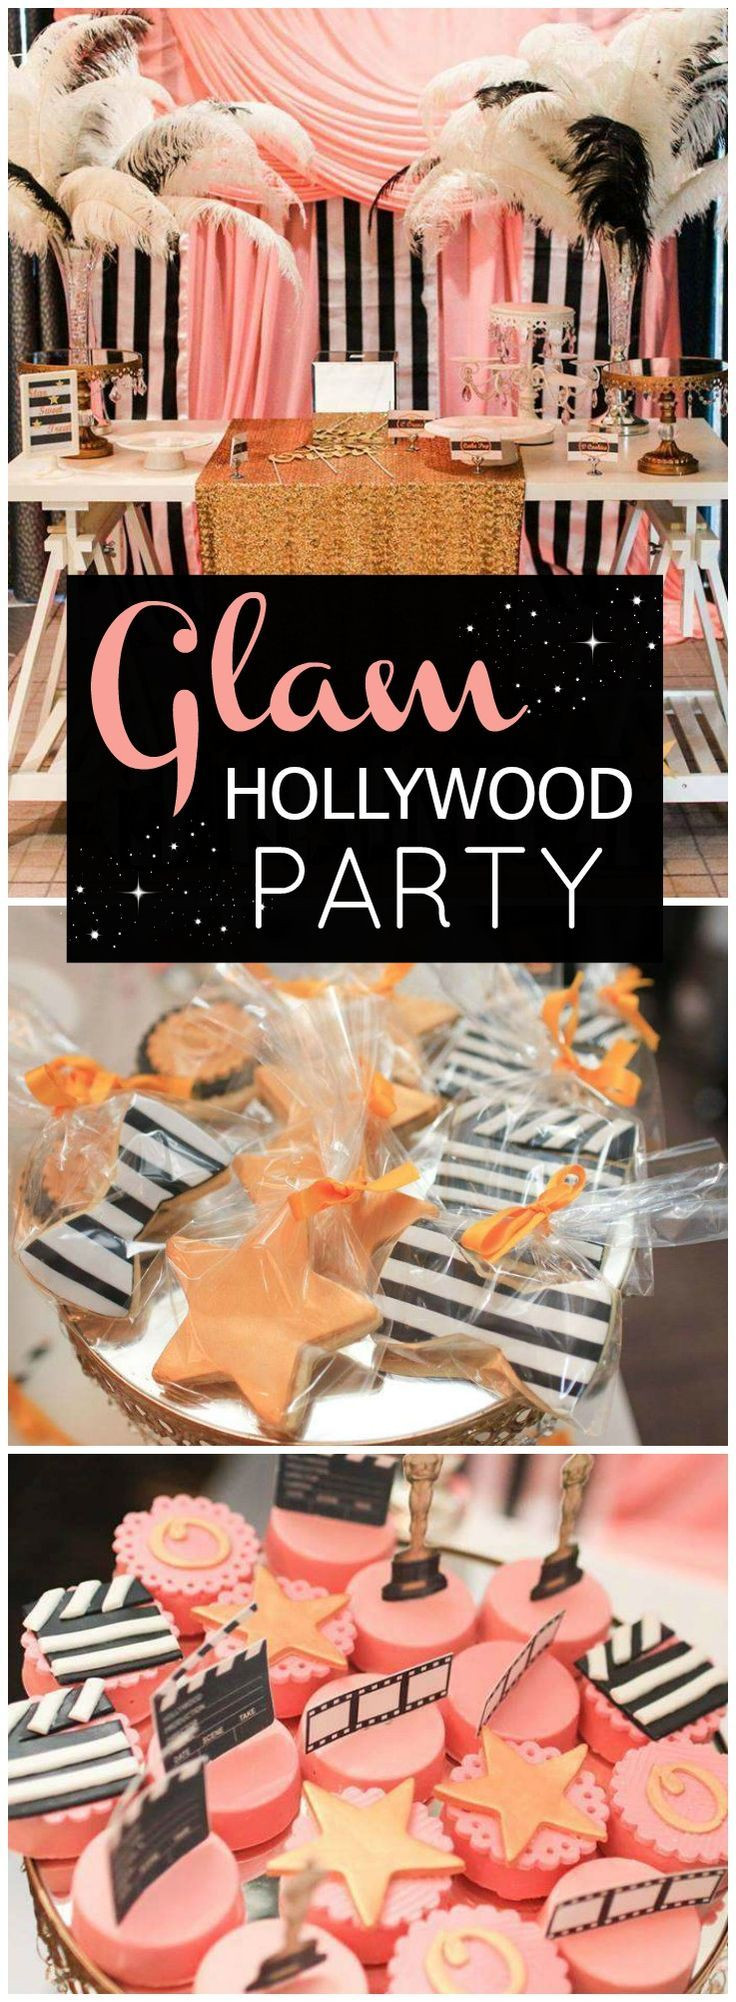 Glamour Birthday Party Ideas
 Glam Hollywood Birthday "Glam 10th Hollywood Birthday